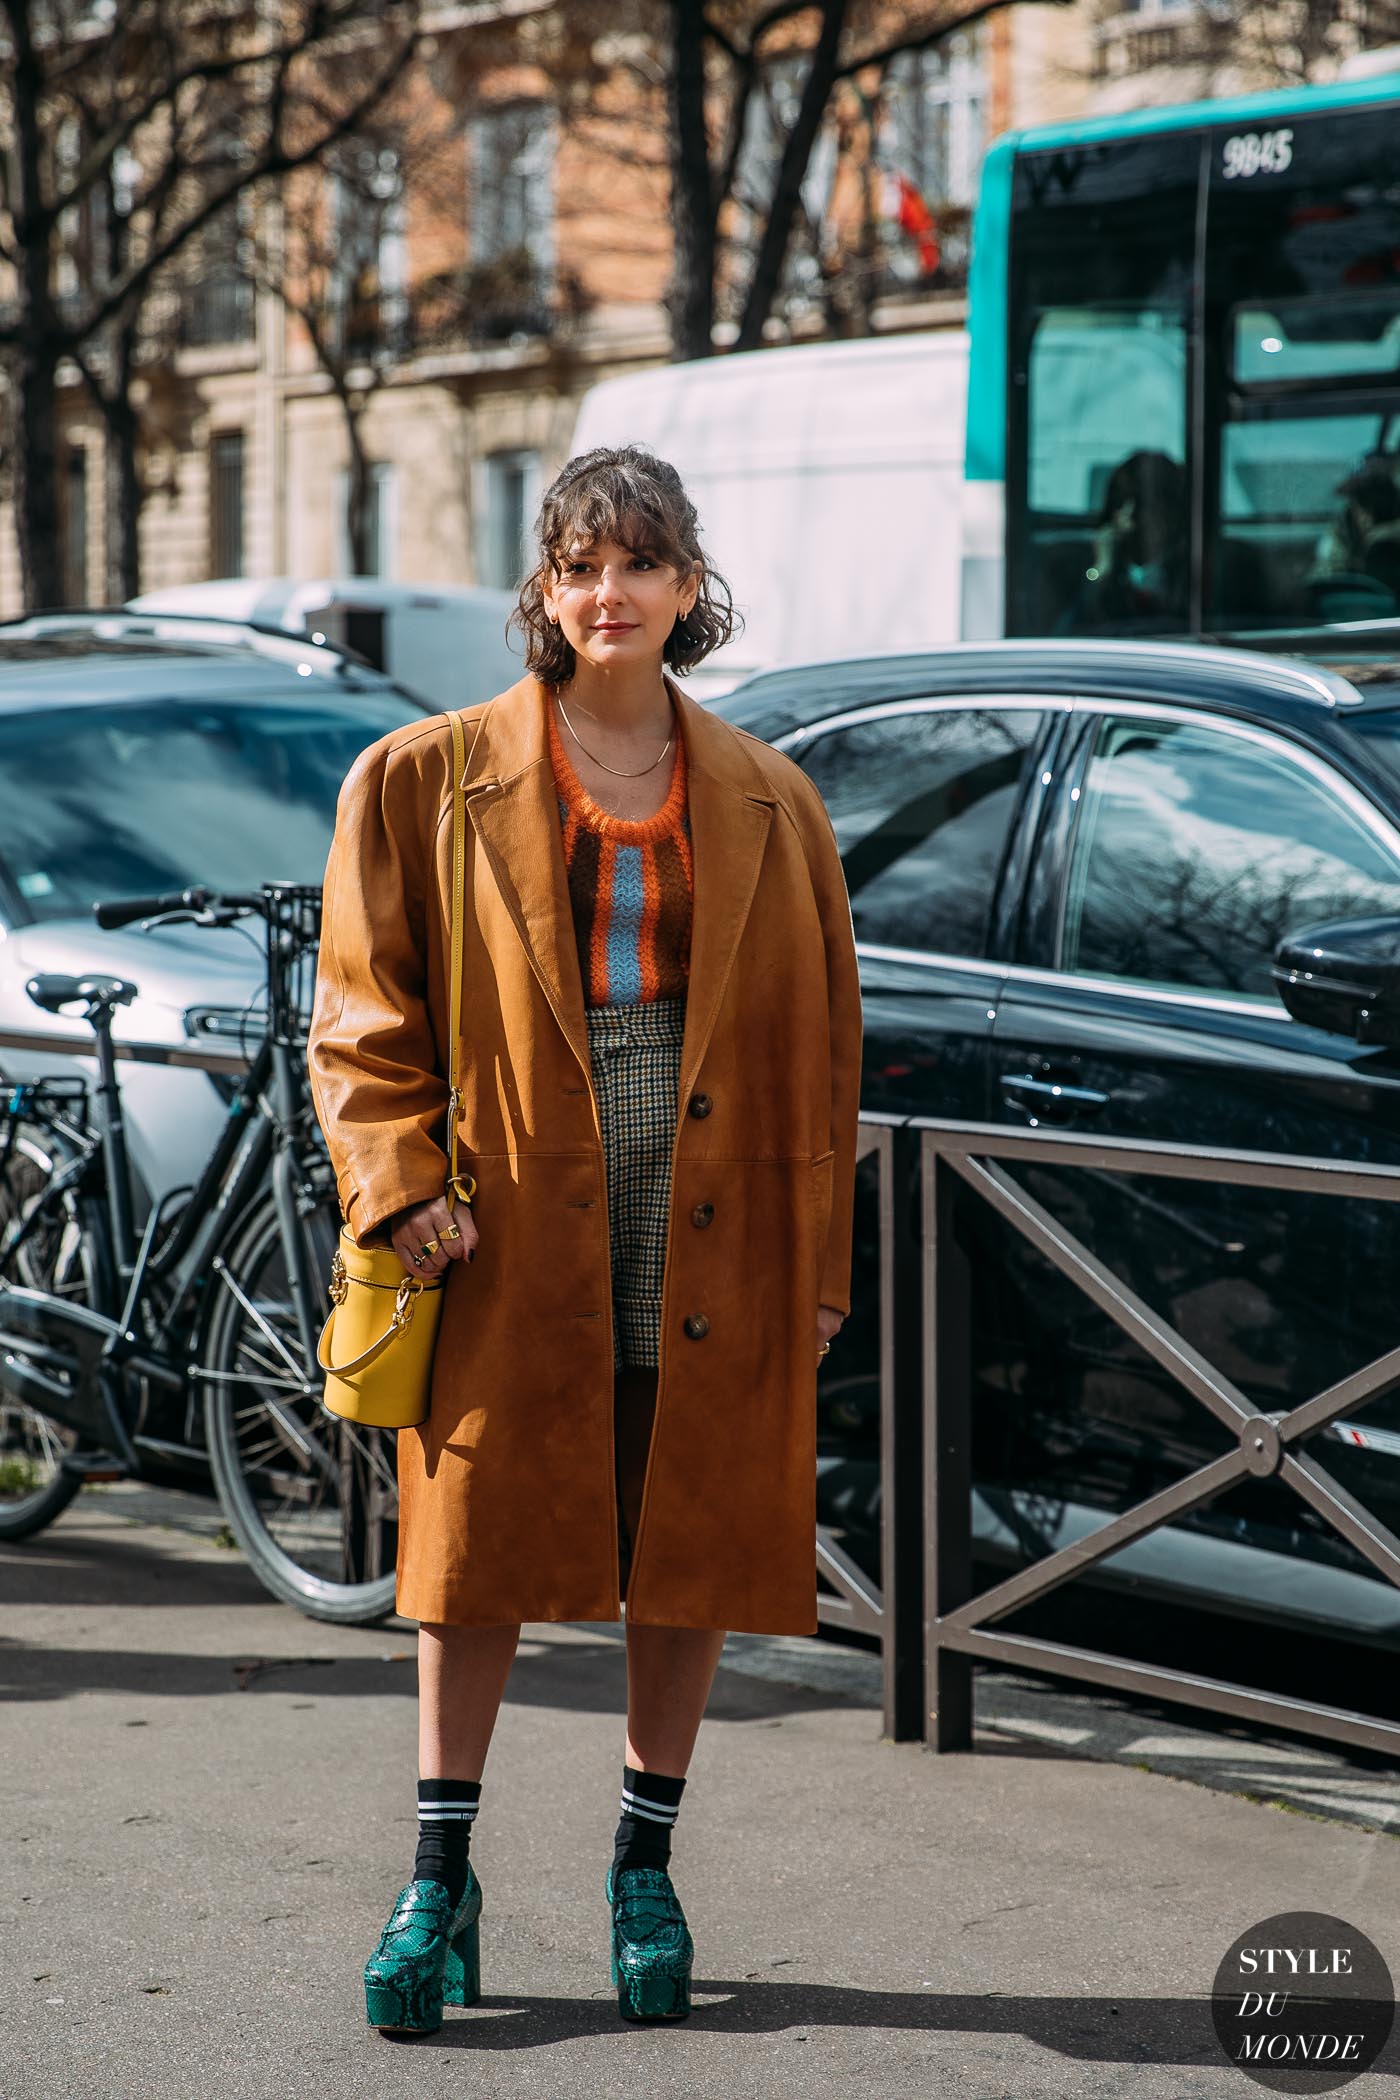 Paris FW 2020 Street Style: Alyssa Coscarelli - STYLE DU MONDE | Street ...